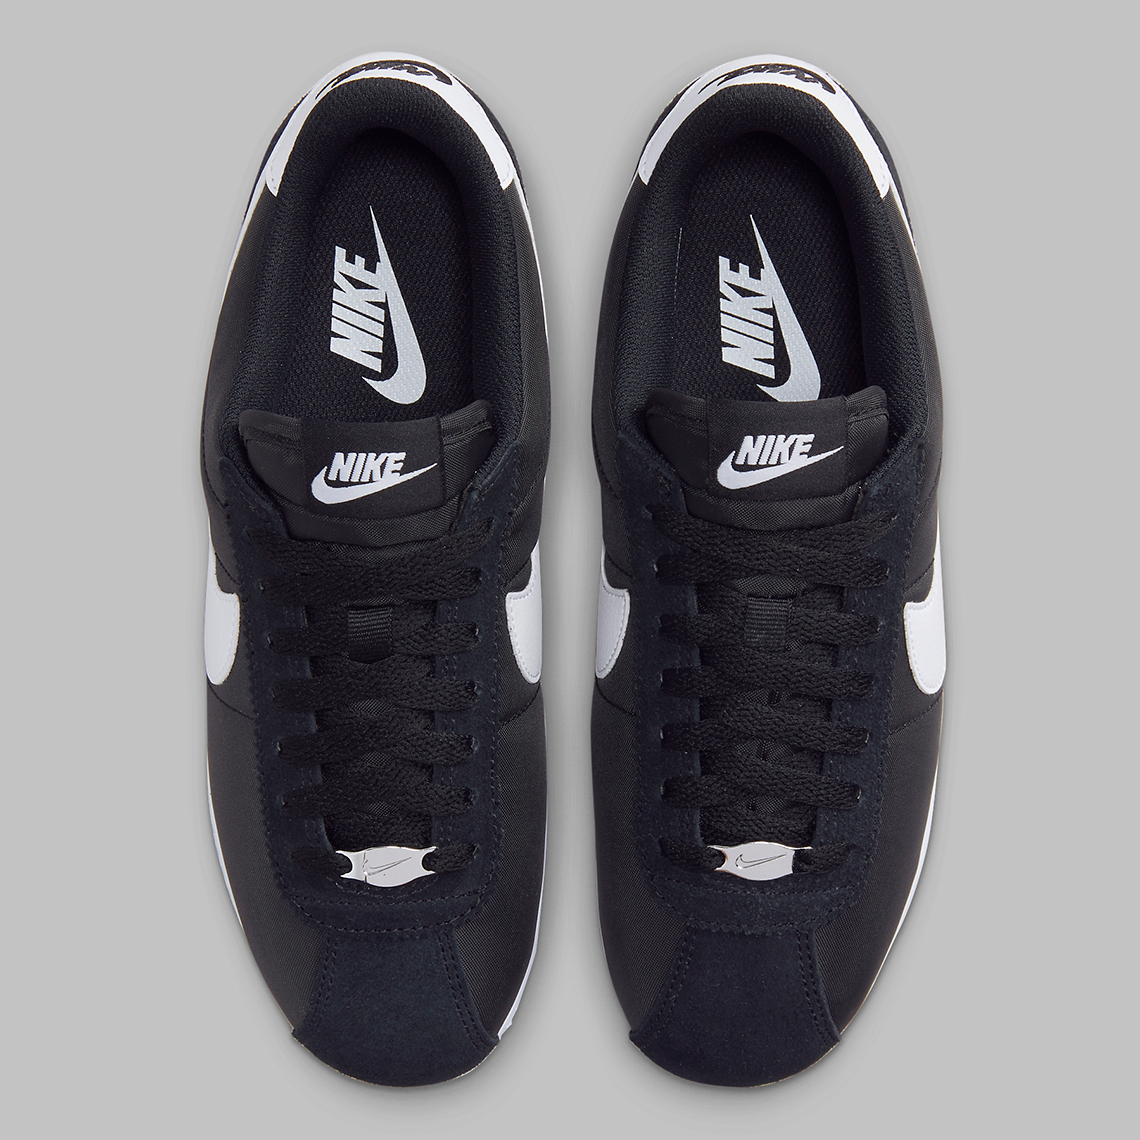 Nike Cortez Womens Black White Dz2795 001 Release Date 8